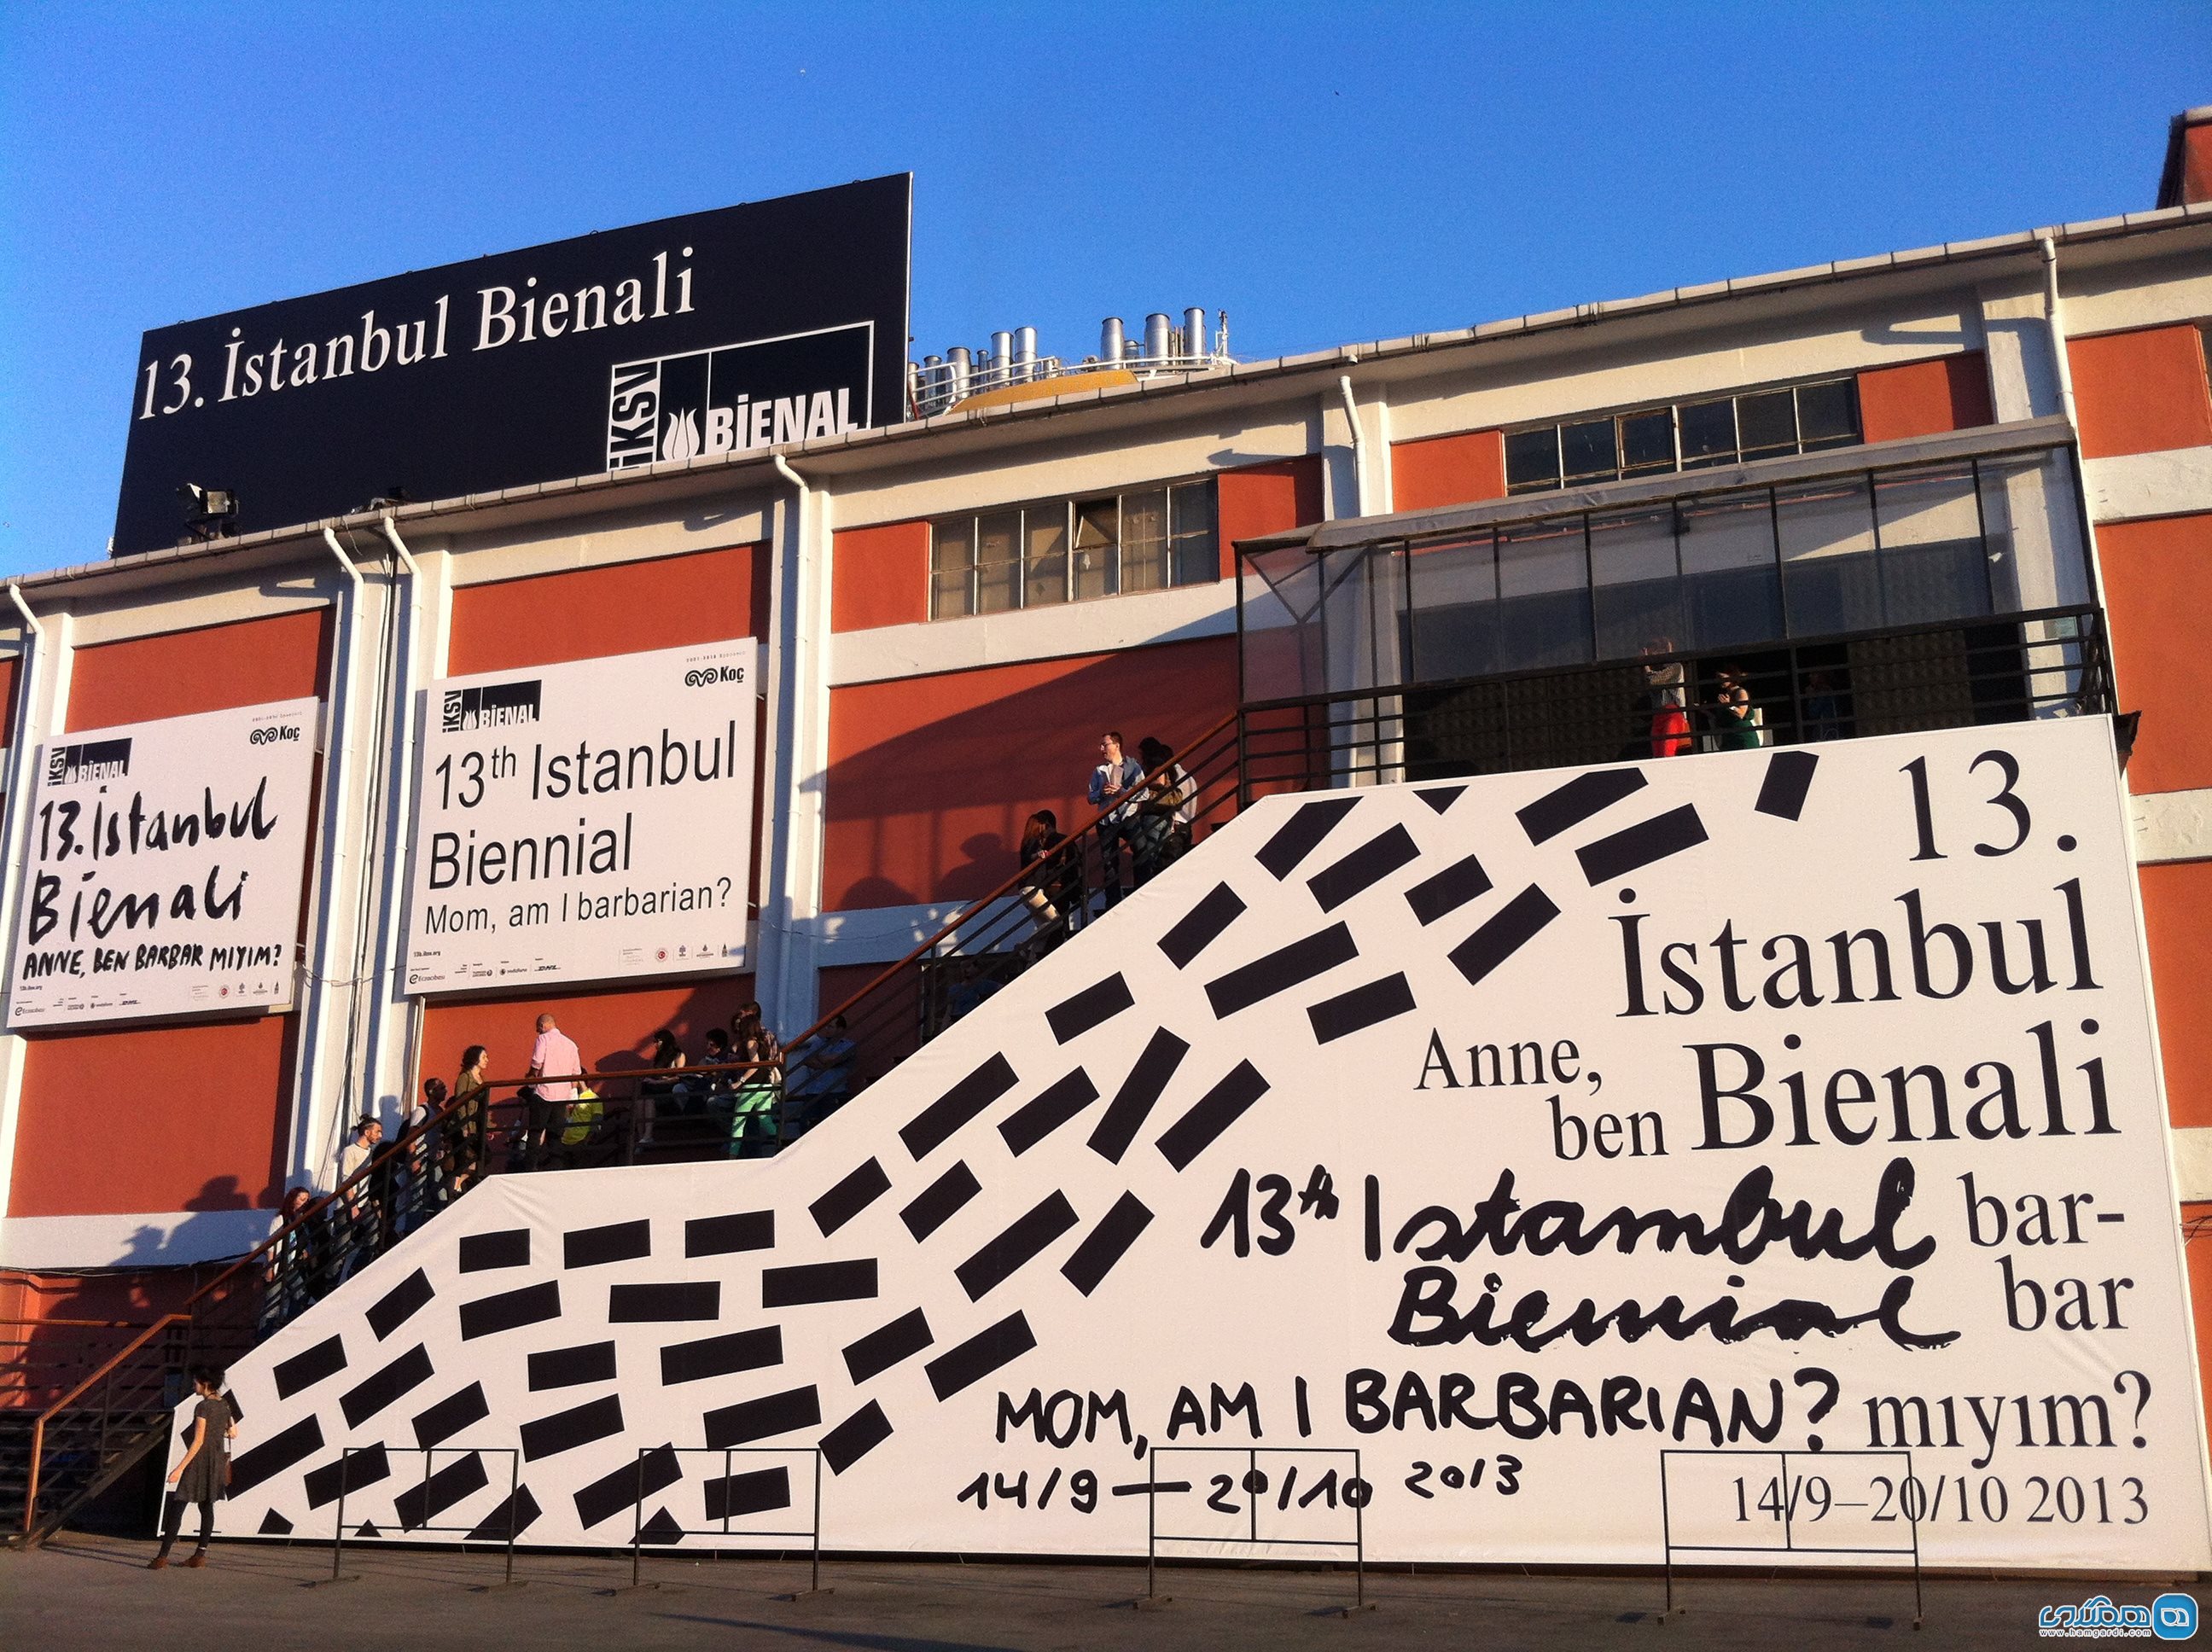 Istanbul Biennial